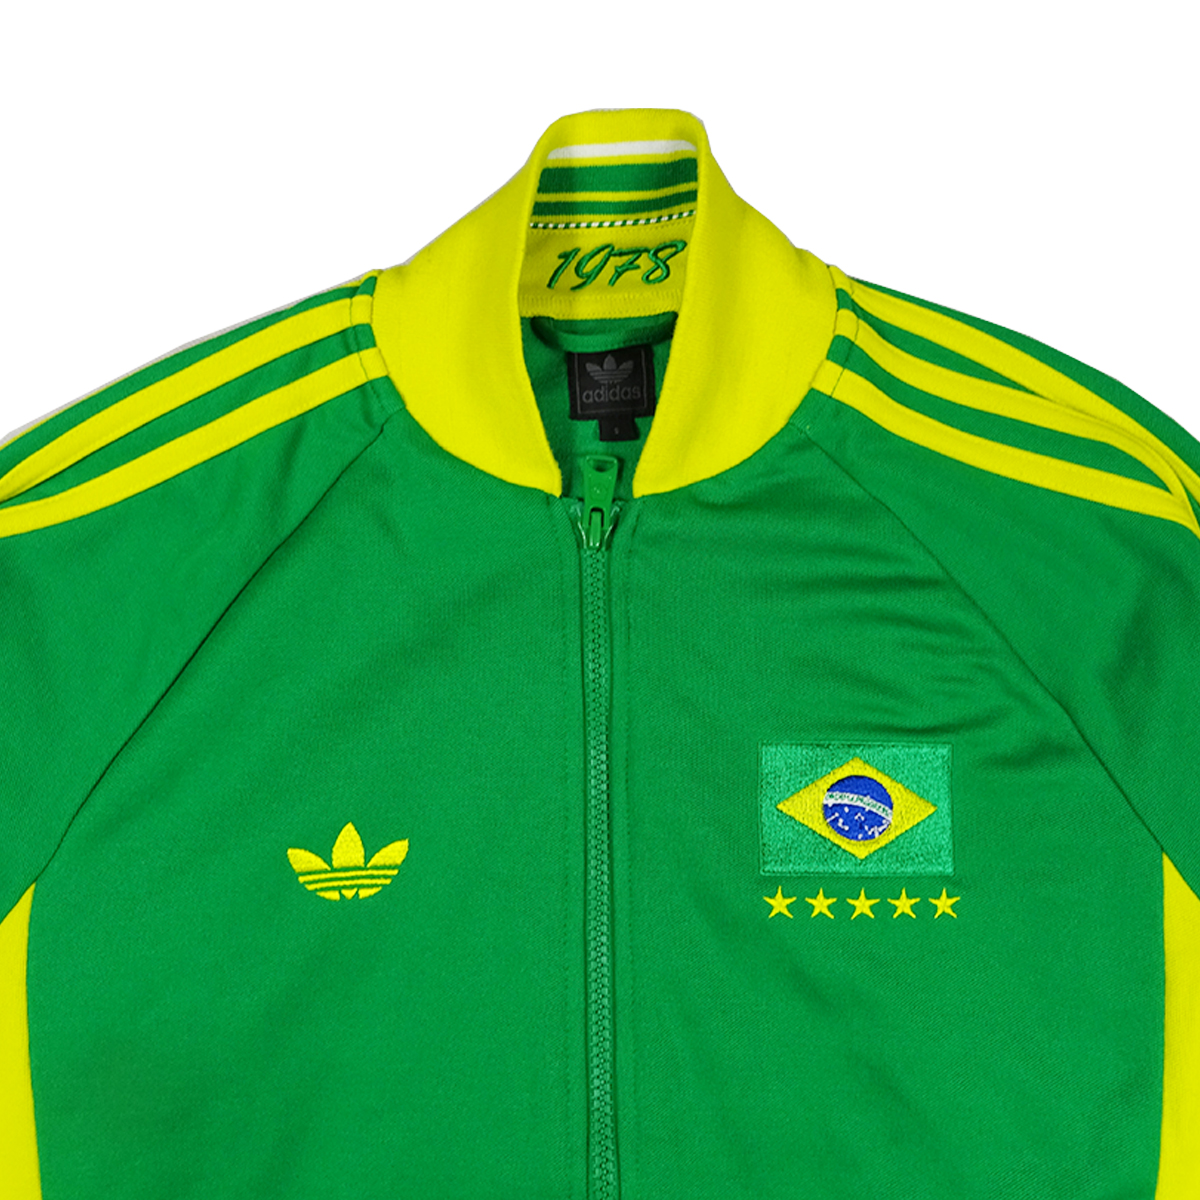 https://90svillage.com/wp-content/uploads/2022/12/0155-Adidas-Brasil-Tracktop-YellowGreen-Small.jpg